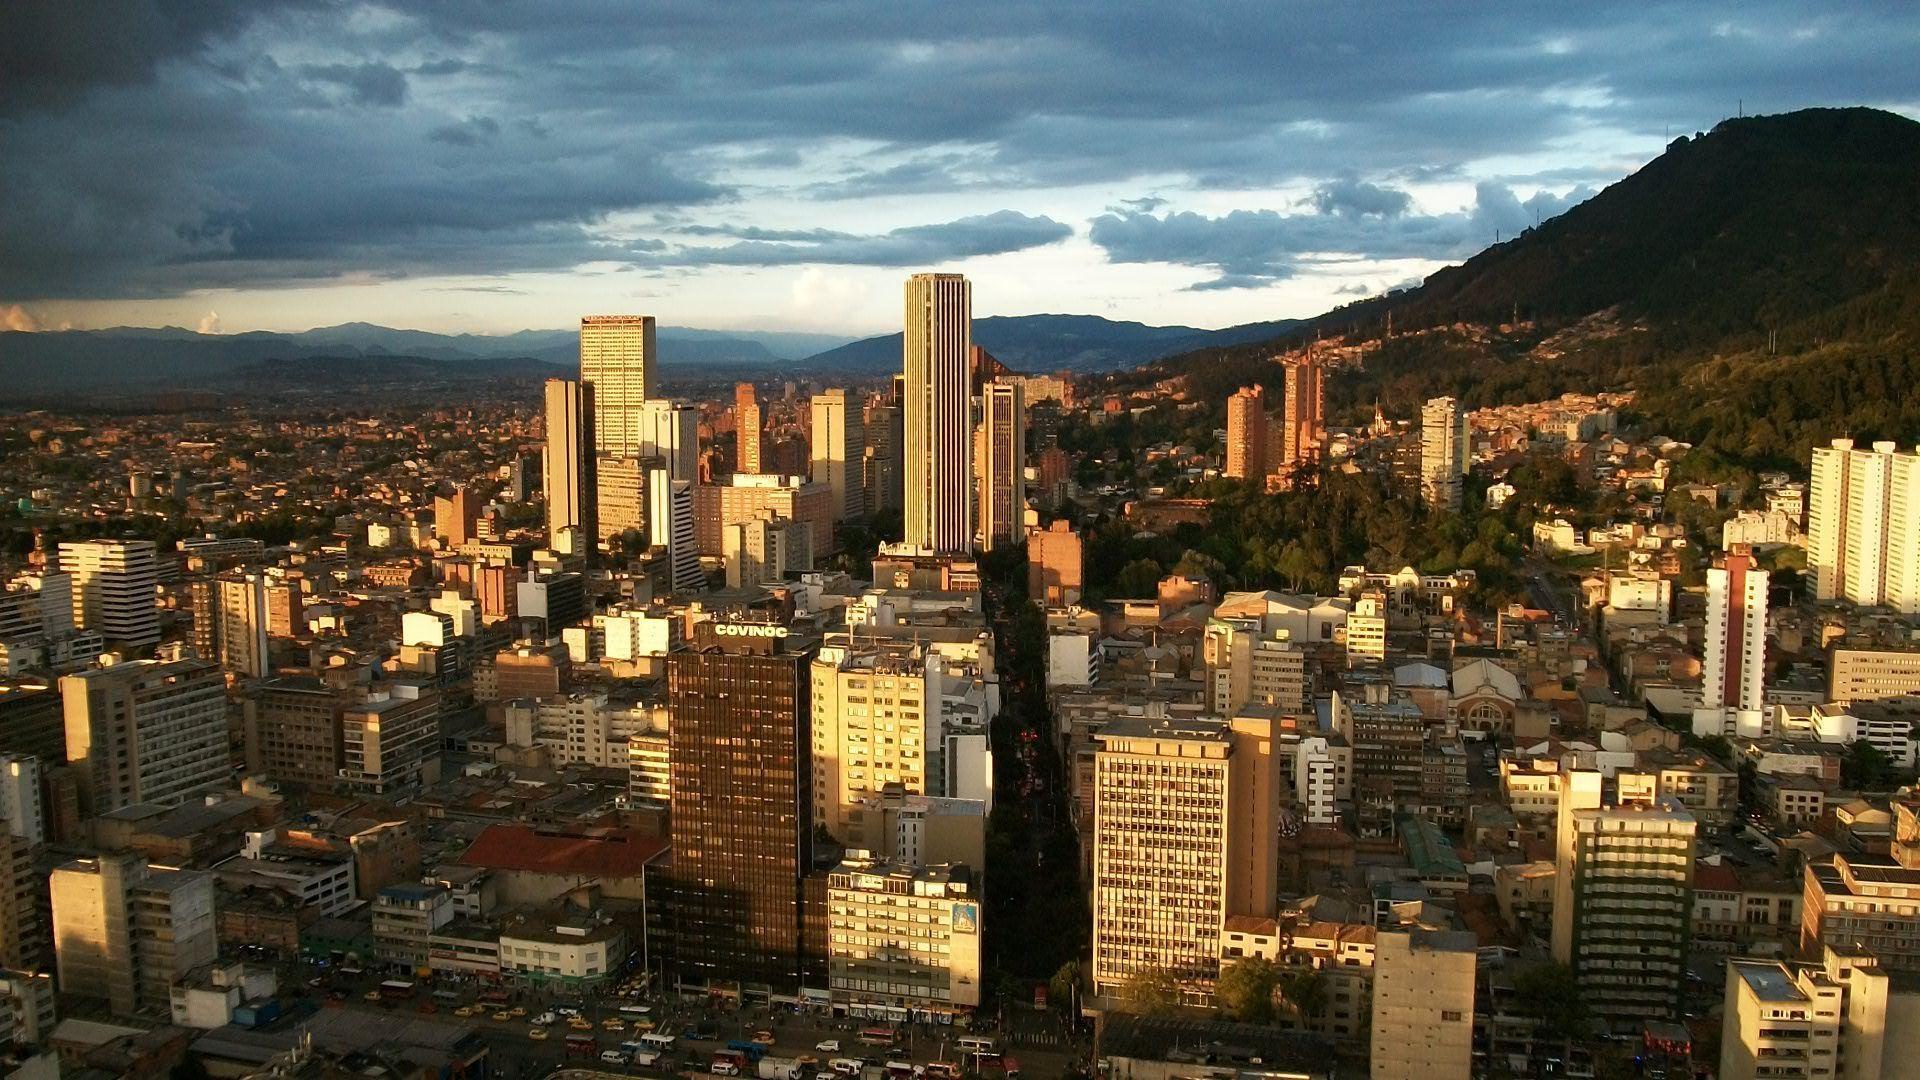 Bogota Wallpaper Image Photo Picture Background